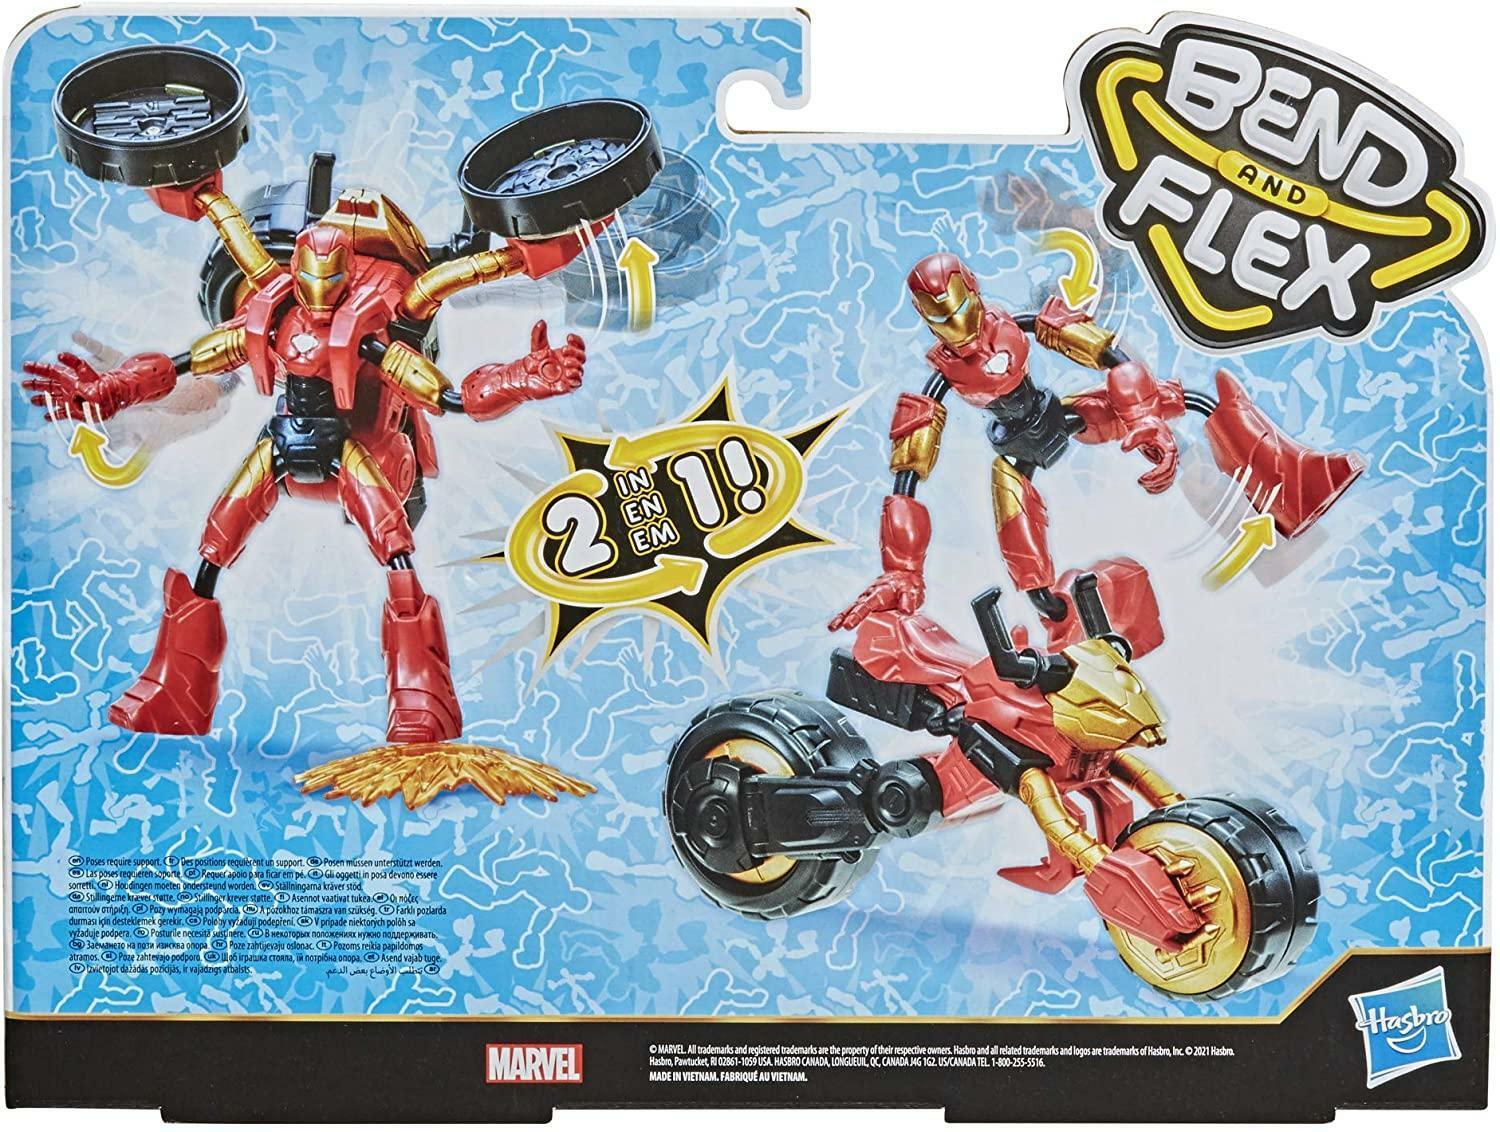 hasbro bend and flex avengers flex rider iron man